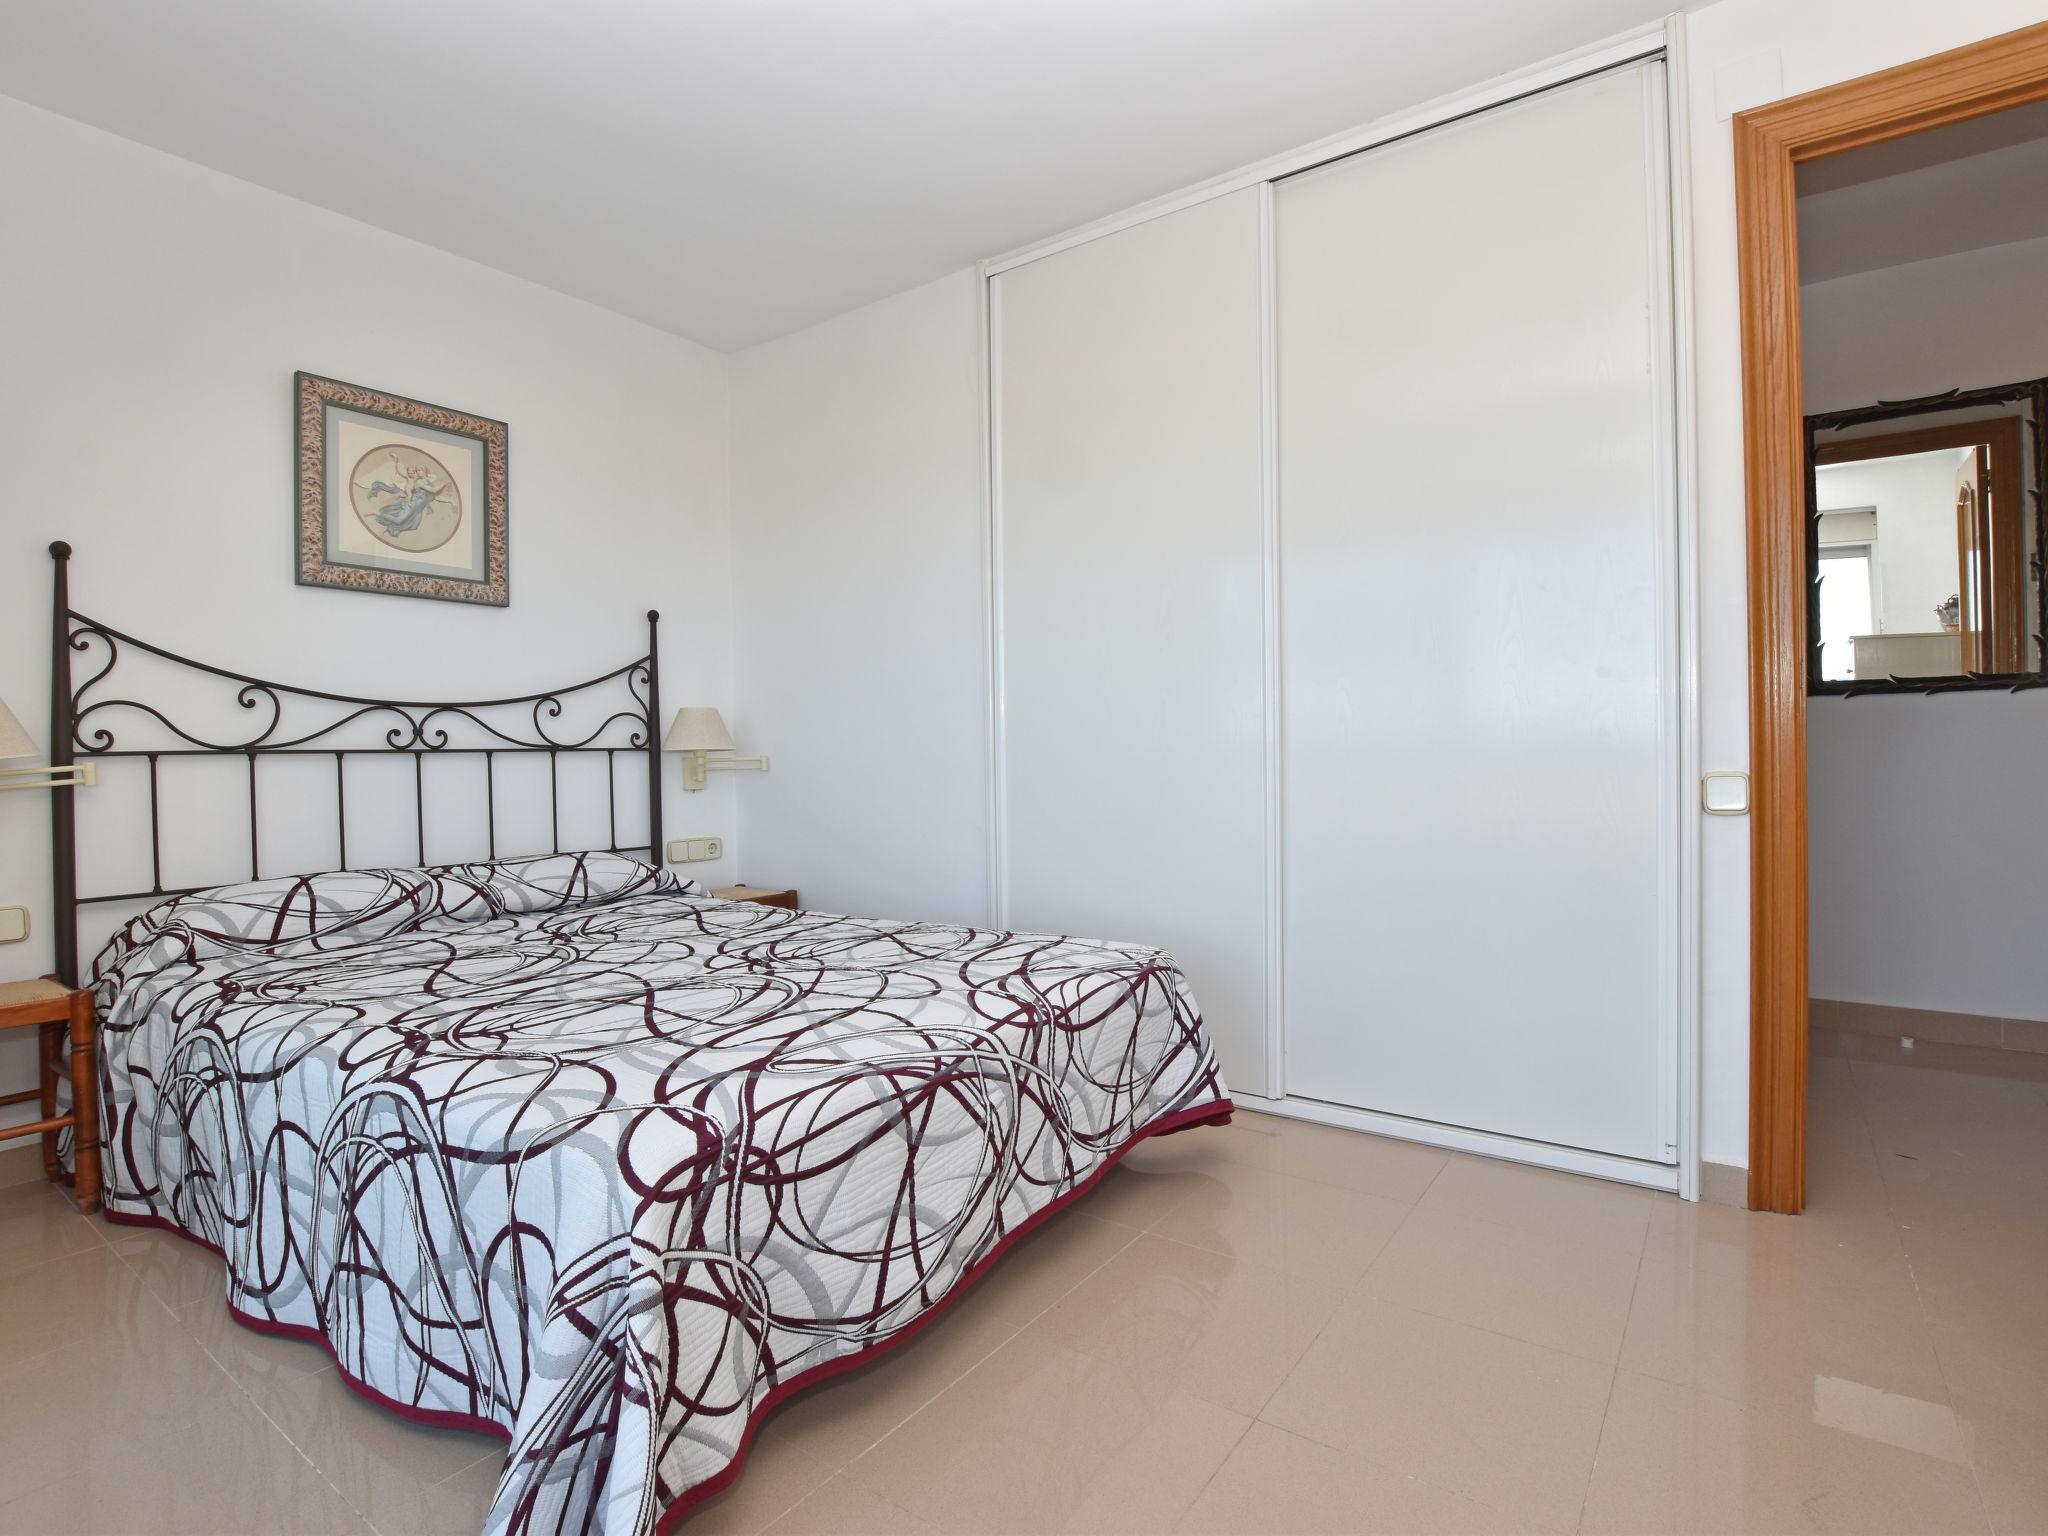 Photo 8 - Appartement de 4 chambres à Torredembarra avec terrasse et vues à la mer